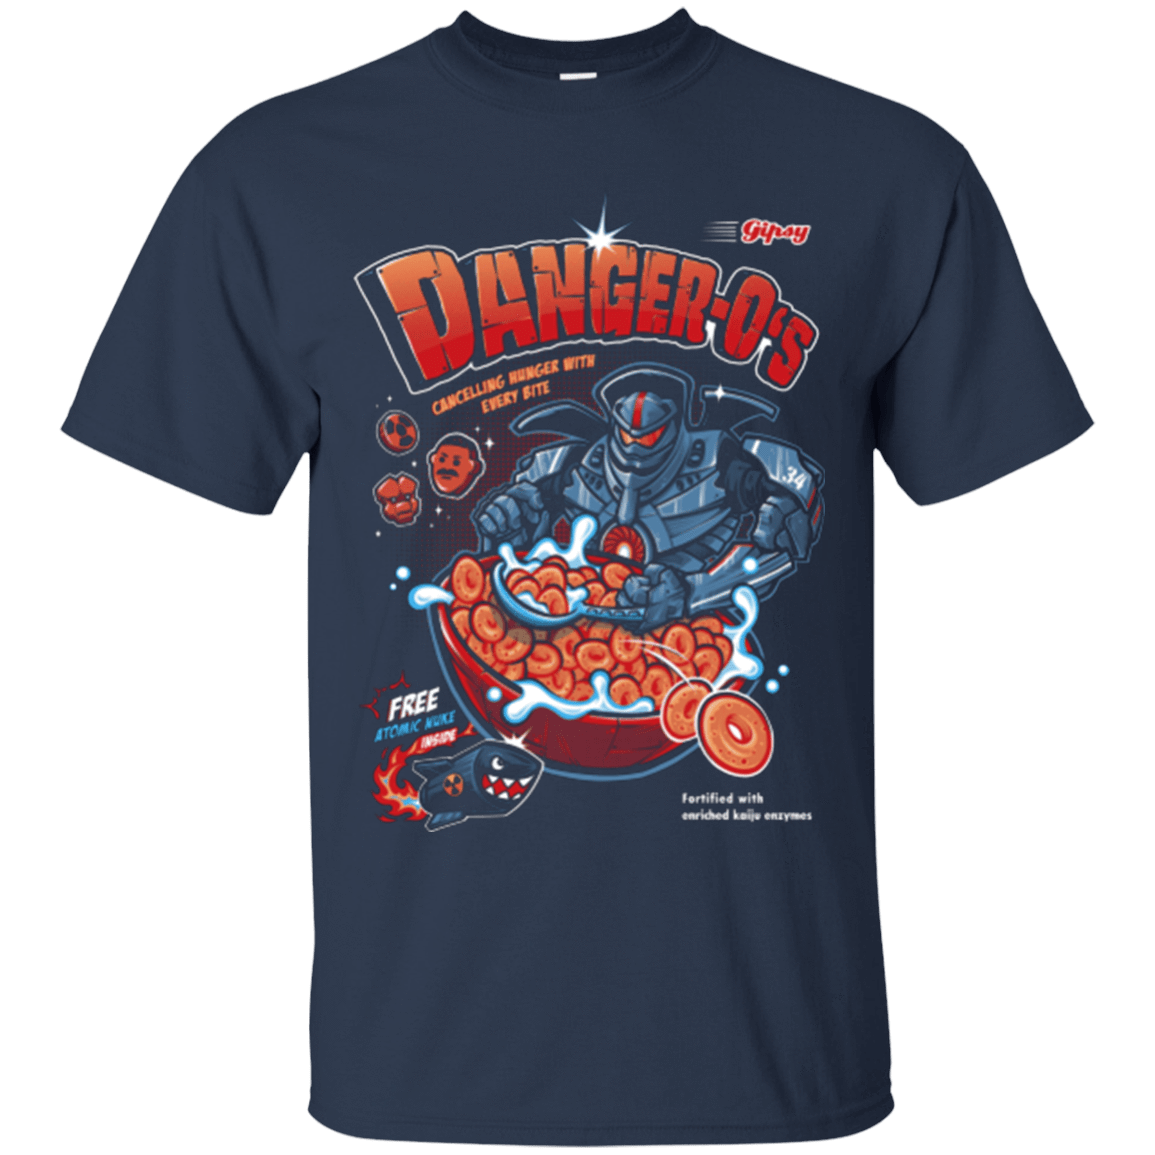 T-Shirts Navy / Small Danger O's T-Shirt